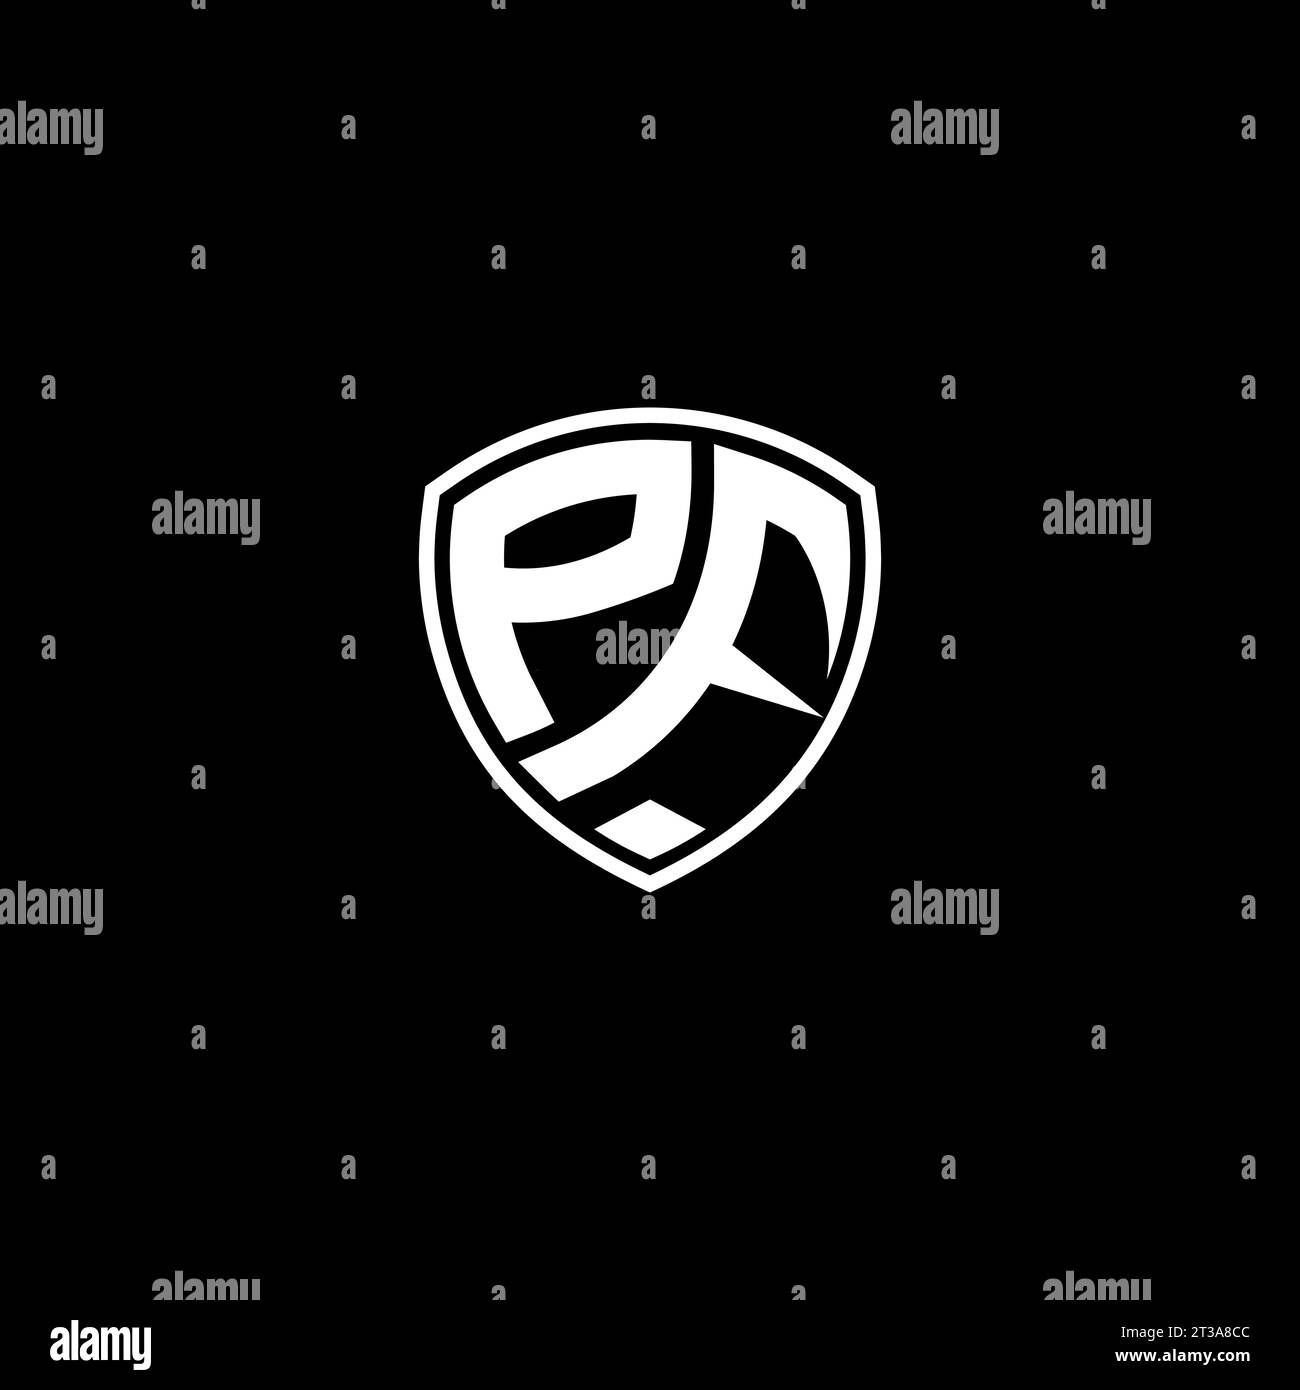 PF logo monogram emblem style with shield shape design template ideas Stock Vector